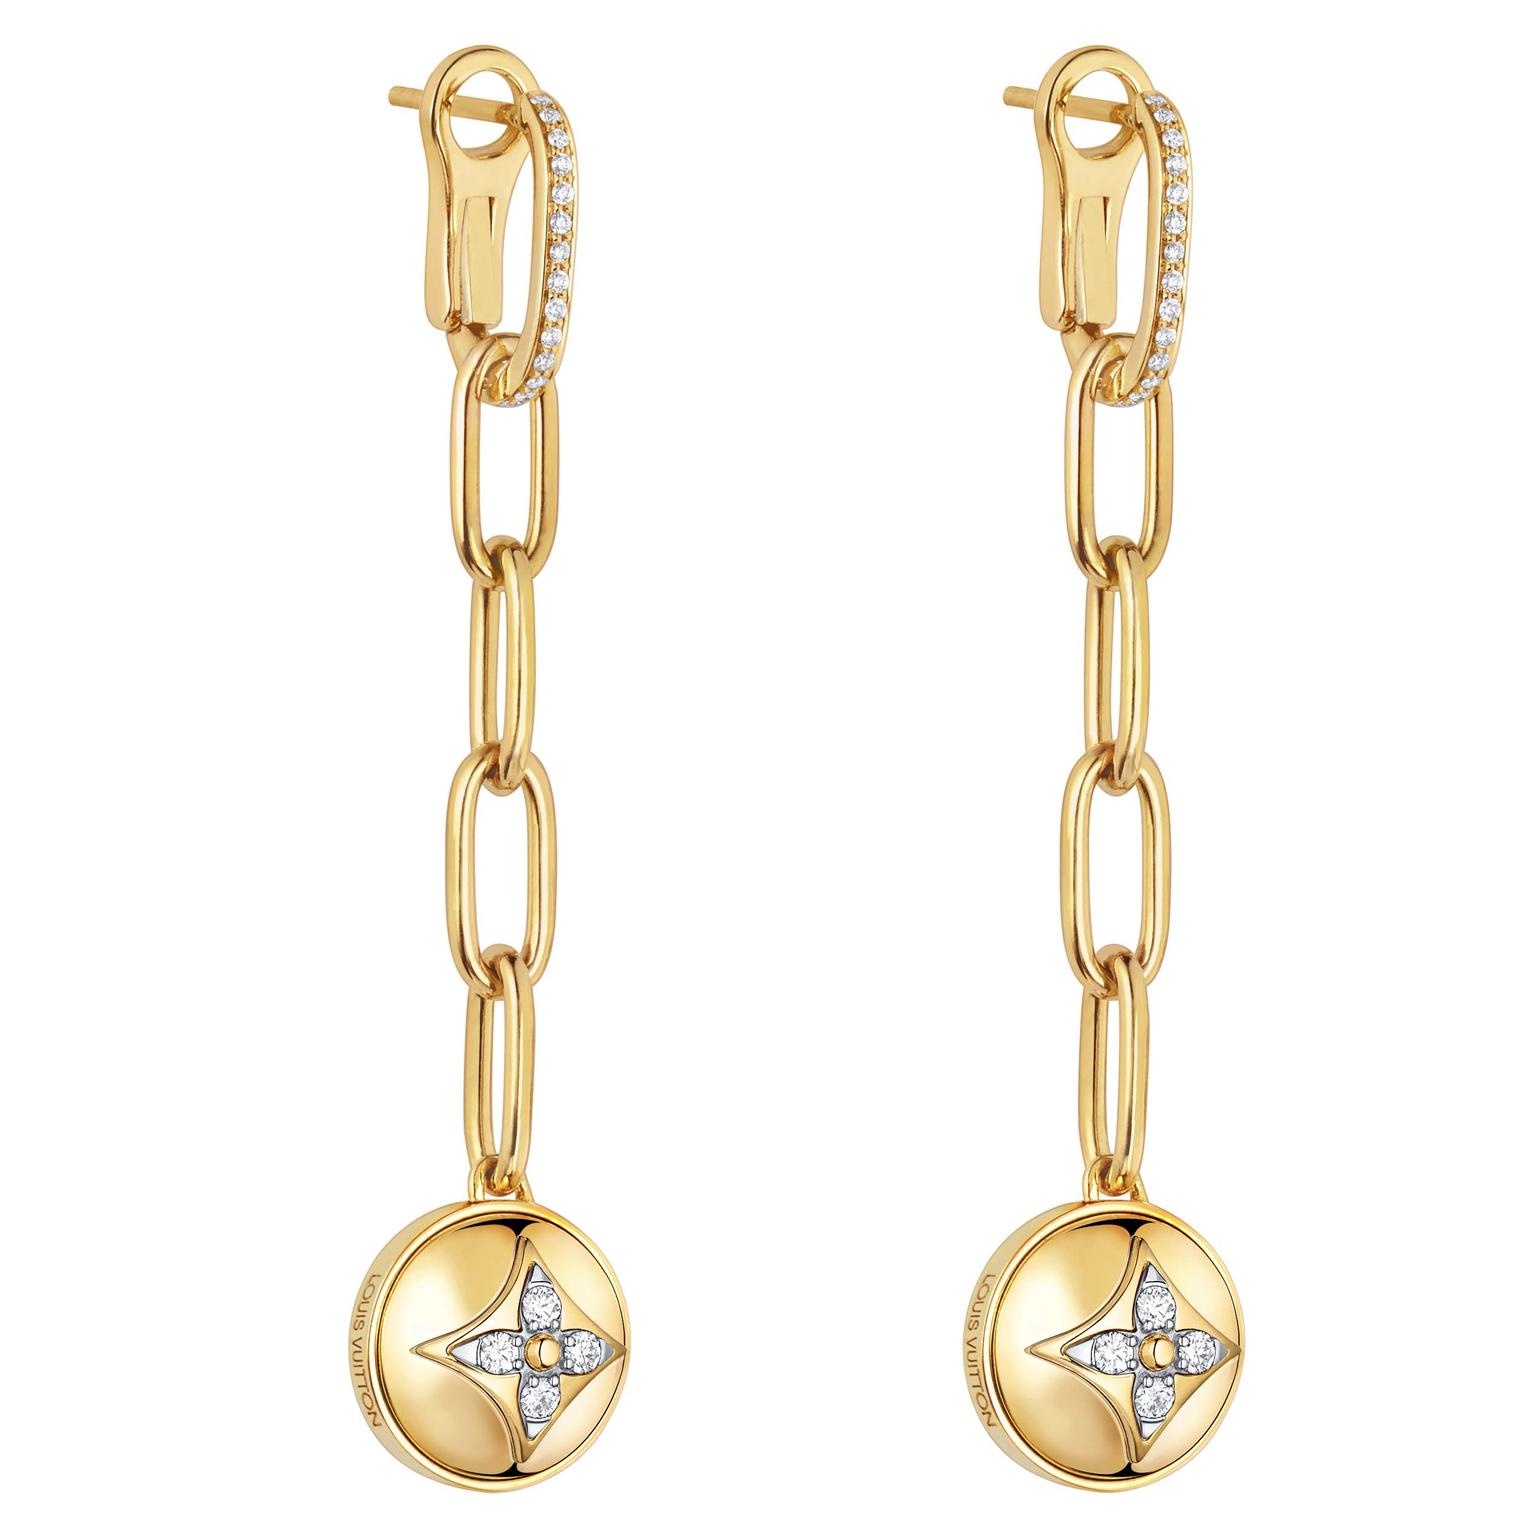 Louis Vuitton B.BLossom earrings in yellow gold, Louis Vuitton